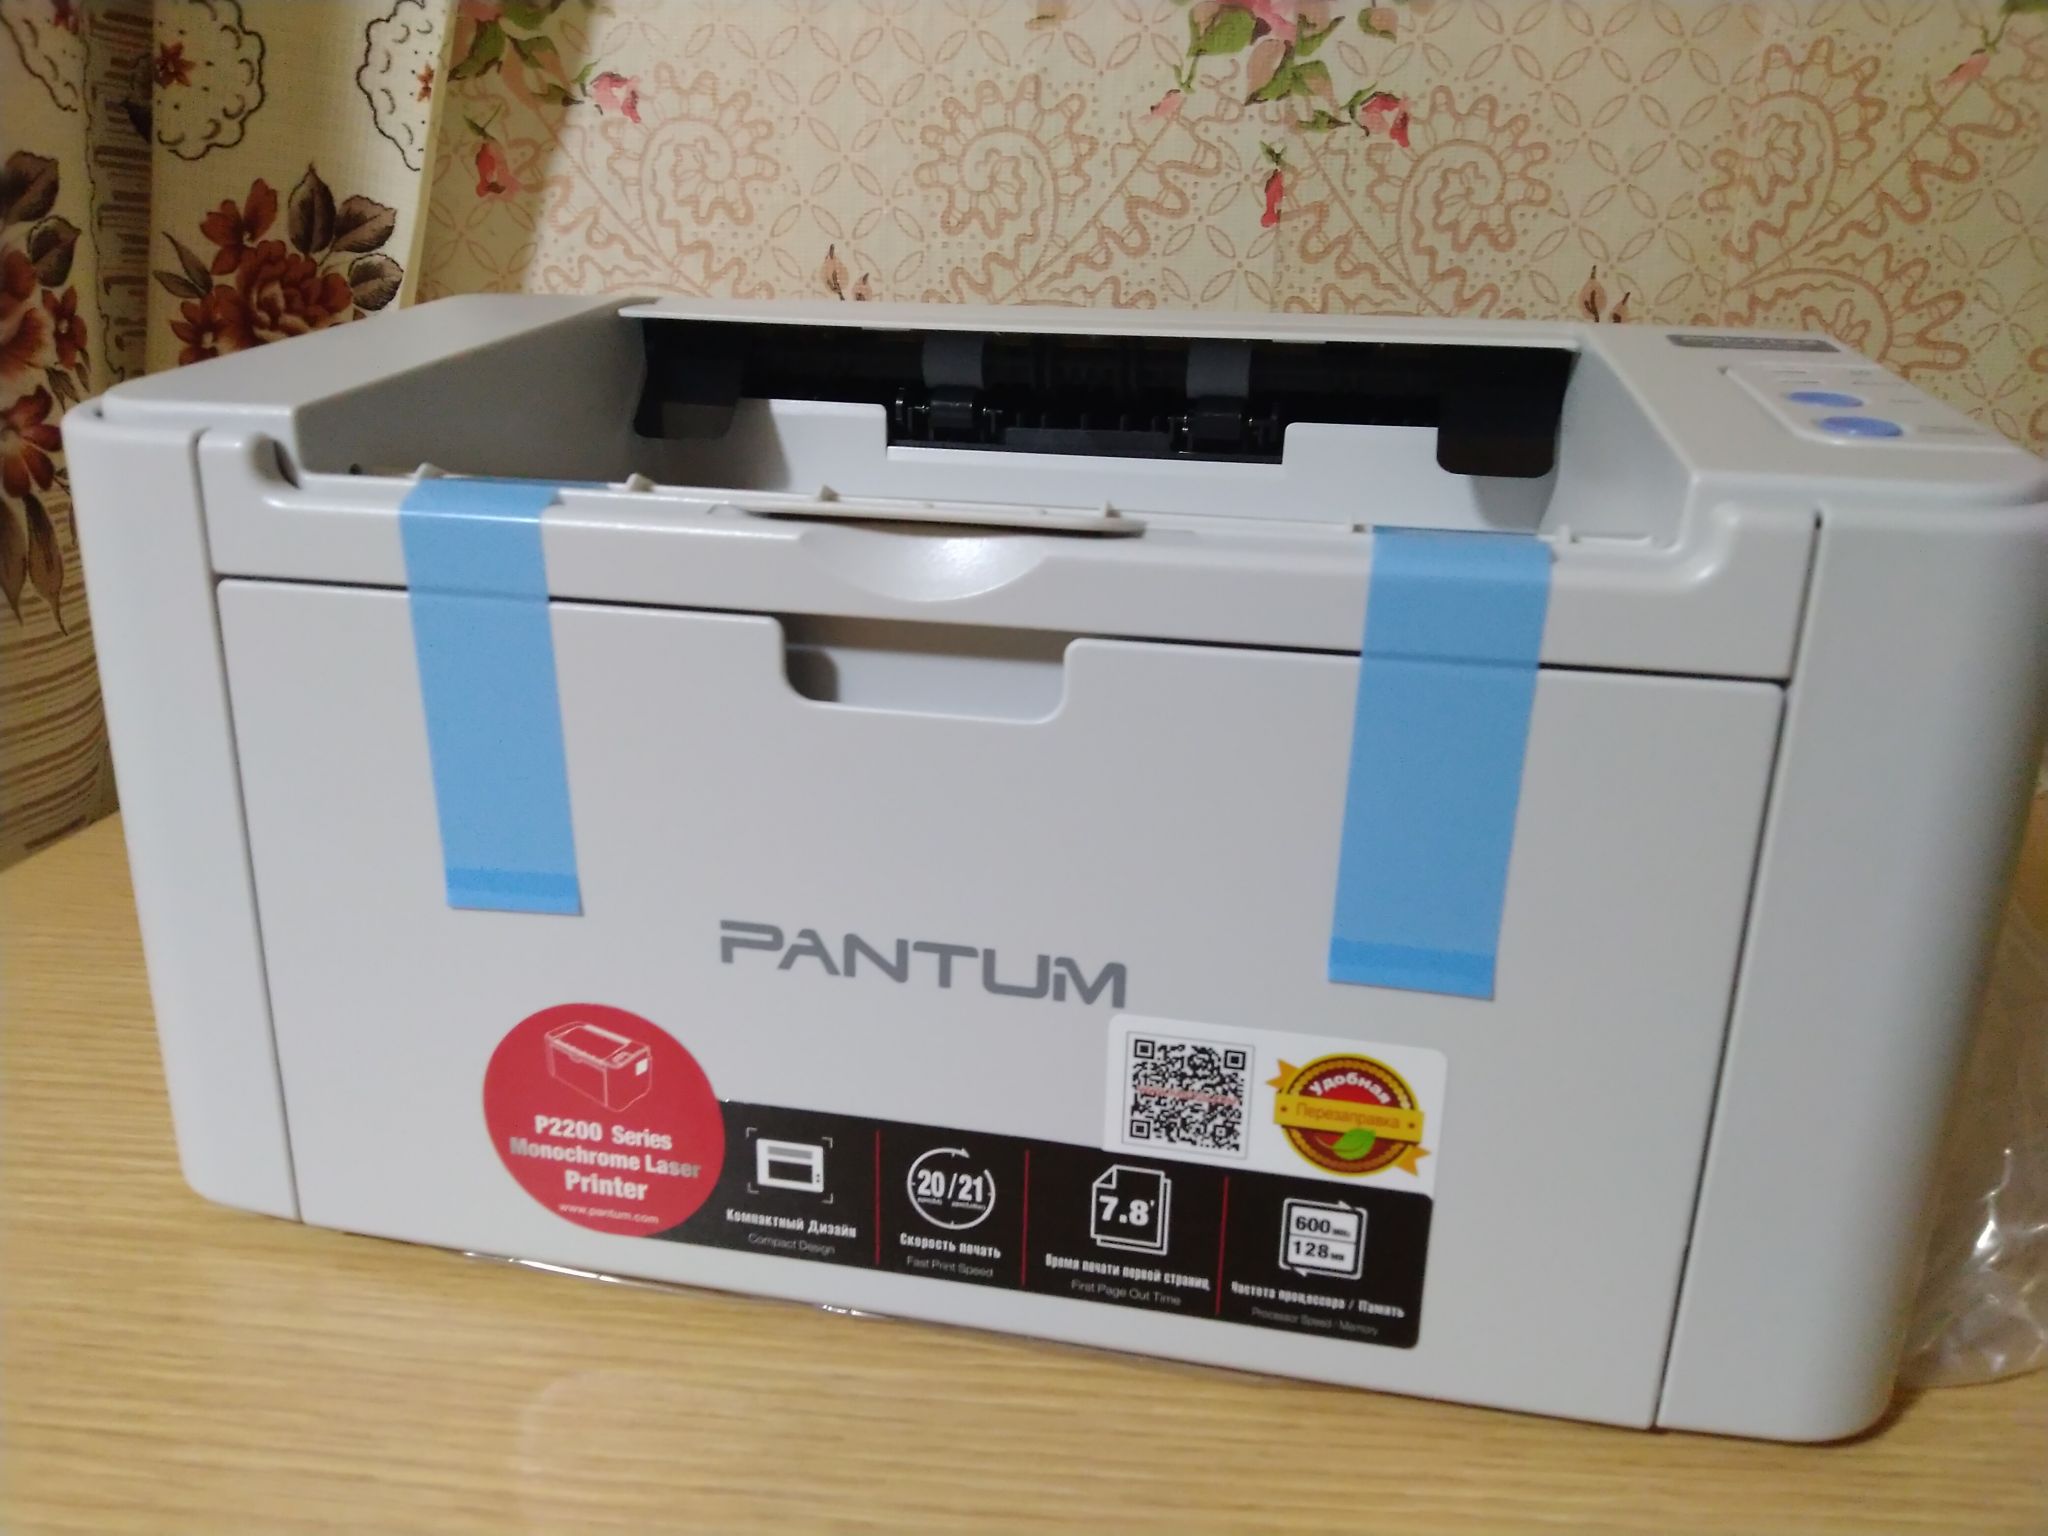 Принтер pantum p2200 series. Принтер лазерный Pantum p2200. Pantum принтер p2200 принтер. Pantum p2200 картридж. Принтер лазерный Pantum p2200 лазерный p2200 характеристики.